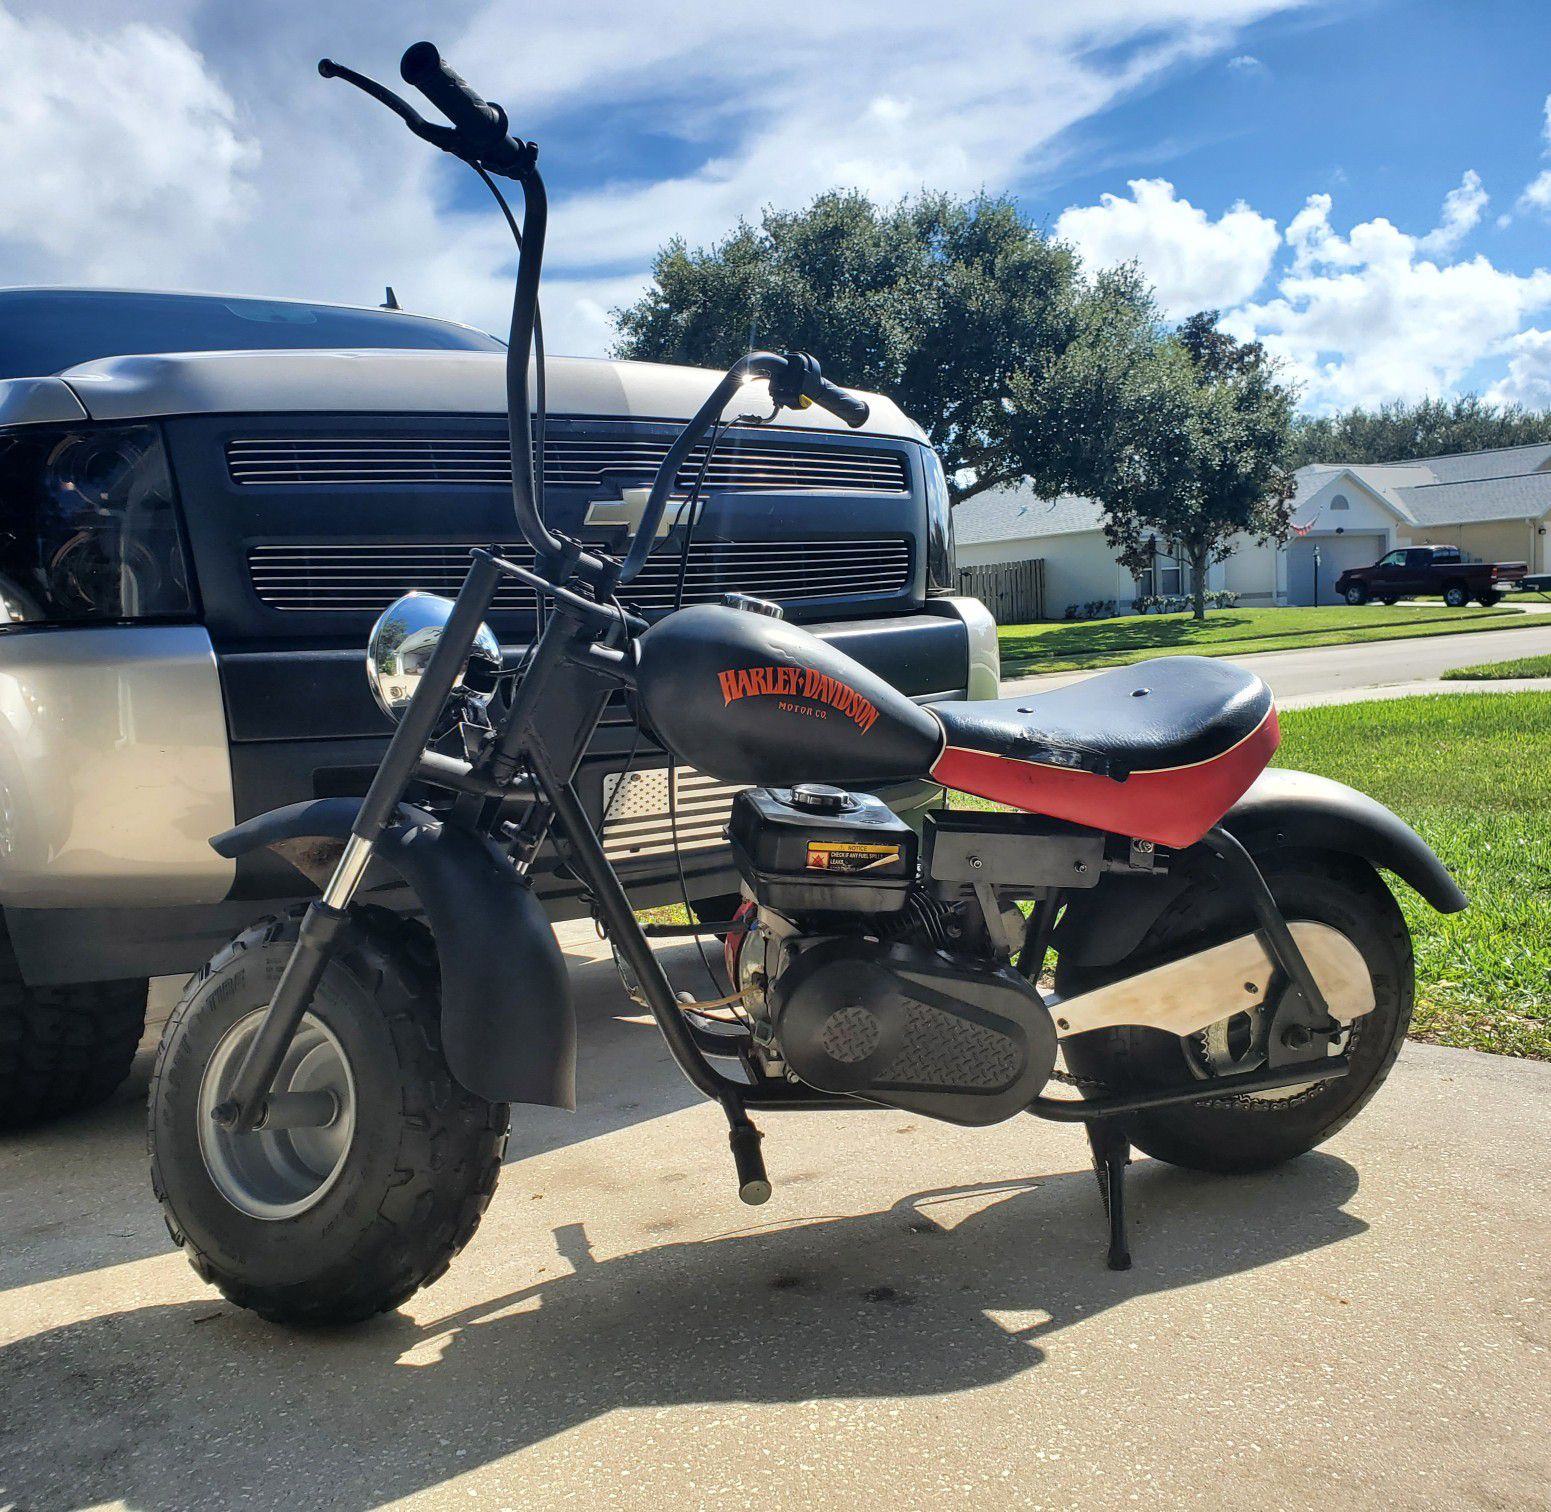 Baja mini bike